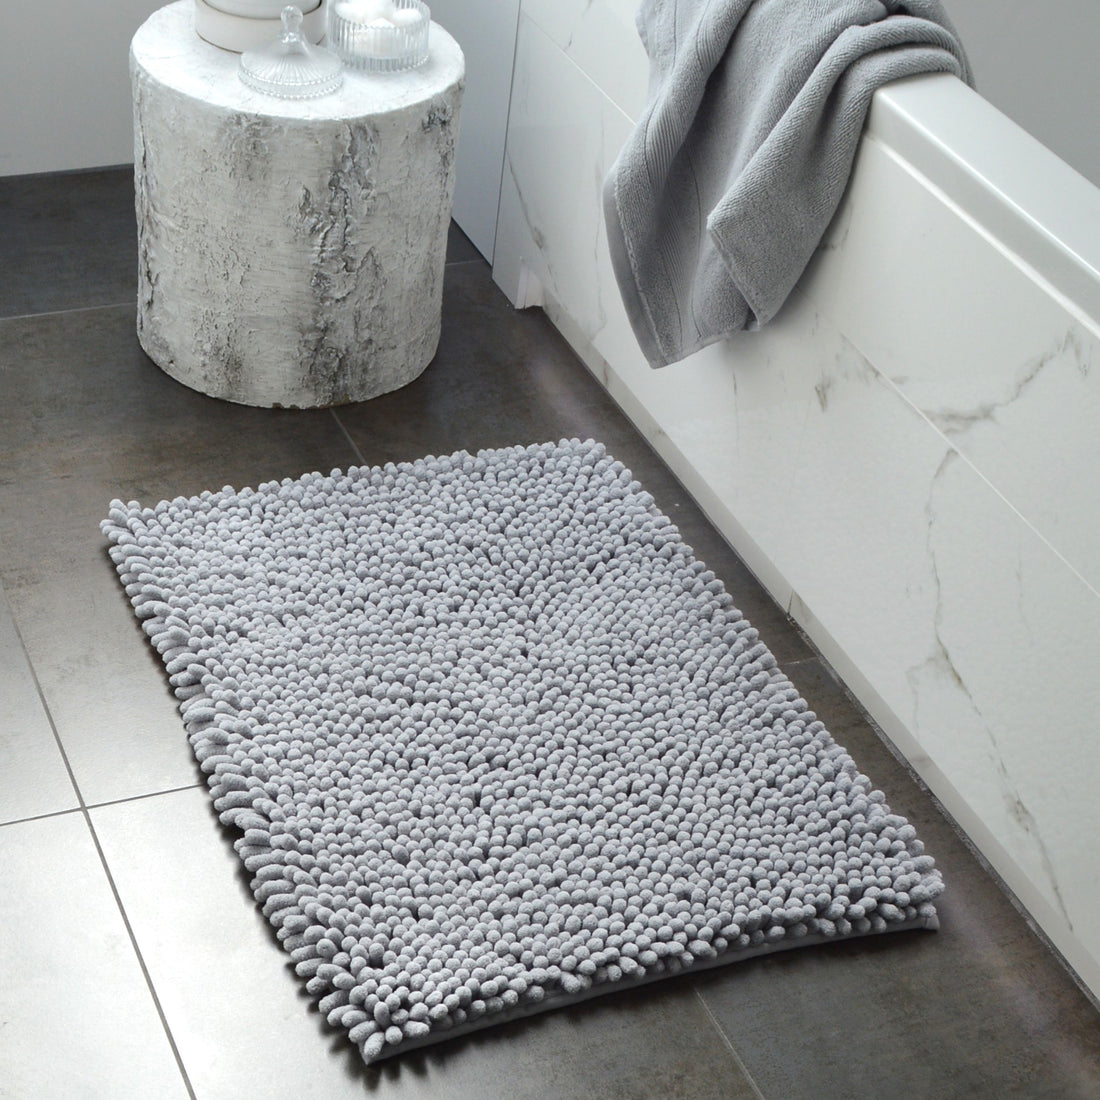 Chenille bobble bath mat in grey